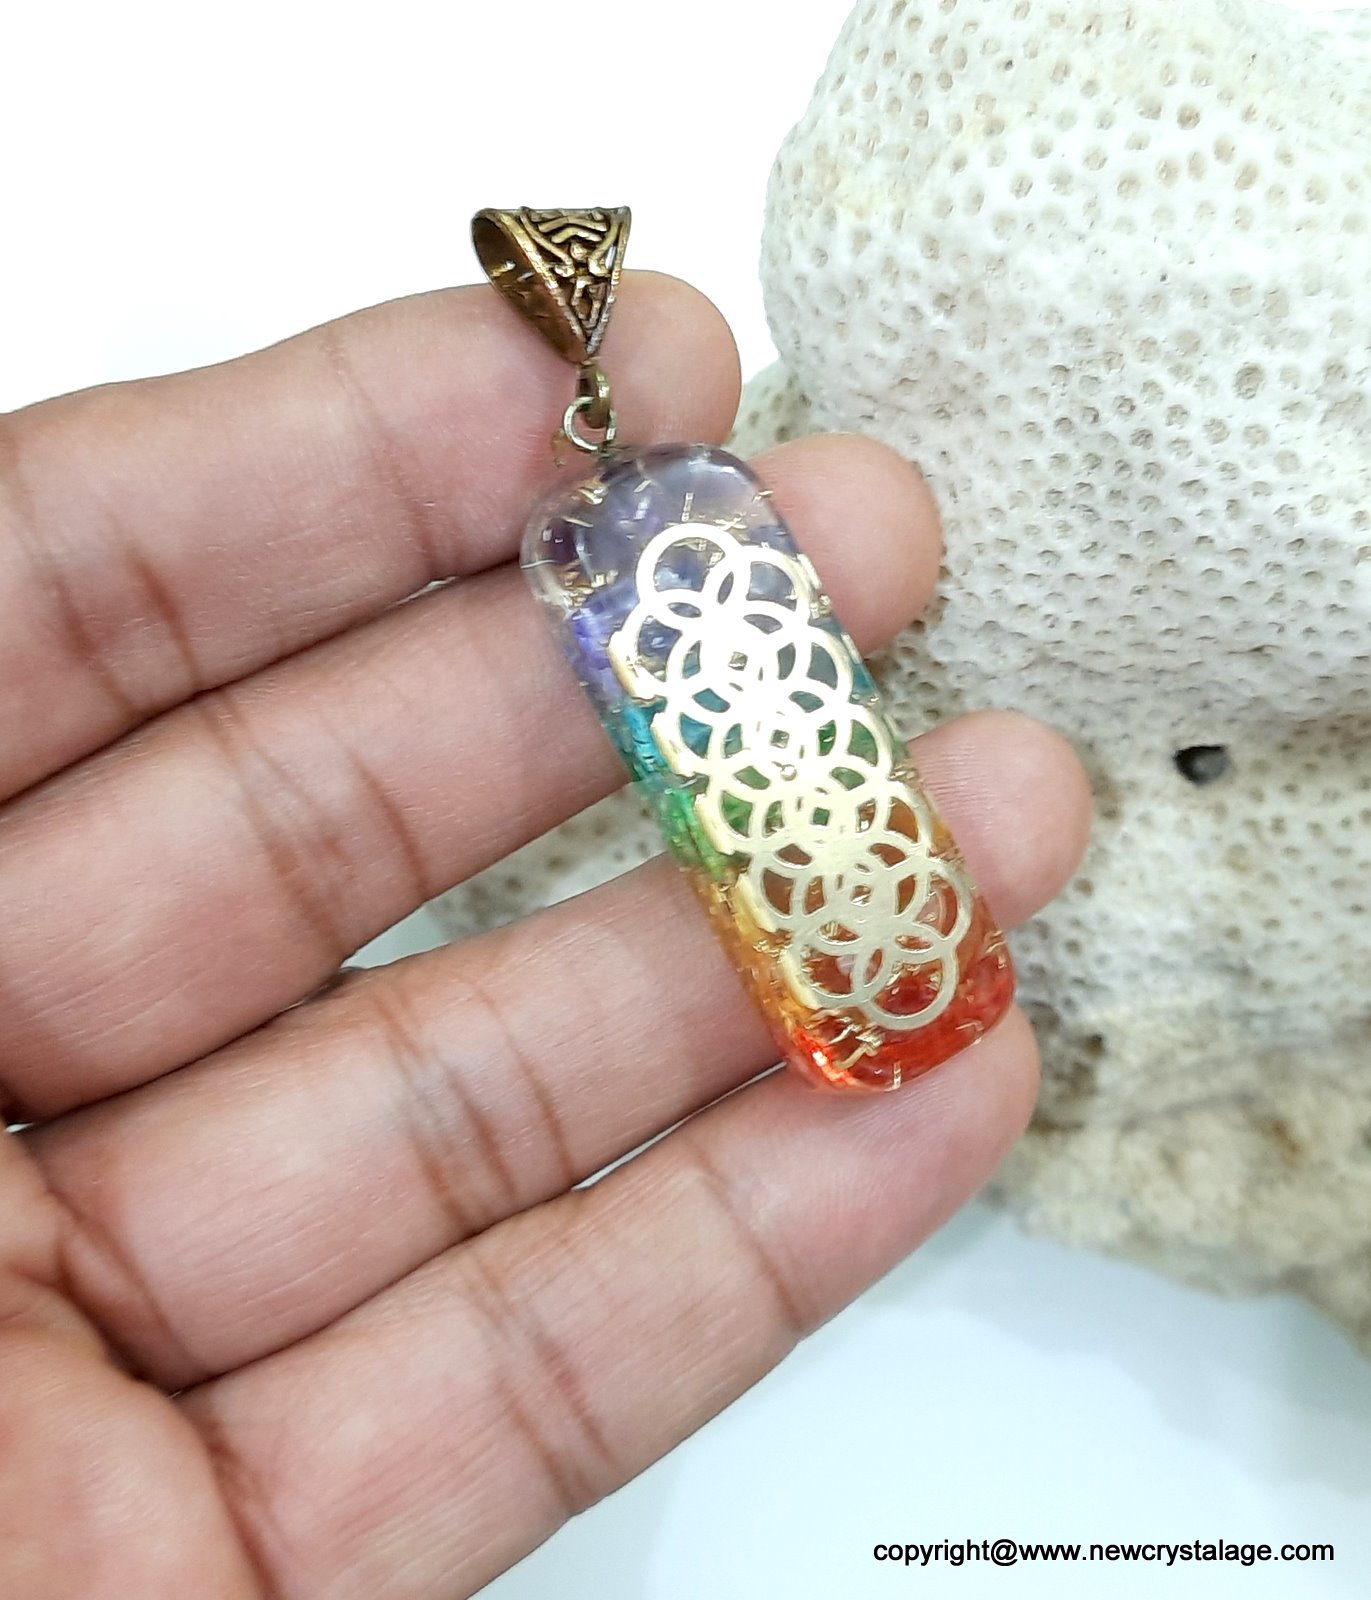 1x Reiki Healing Energy Crystal Angel Prayed Chakra Pendant For Necklace Making